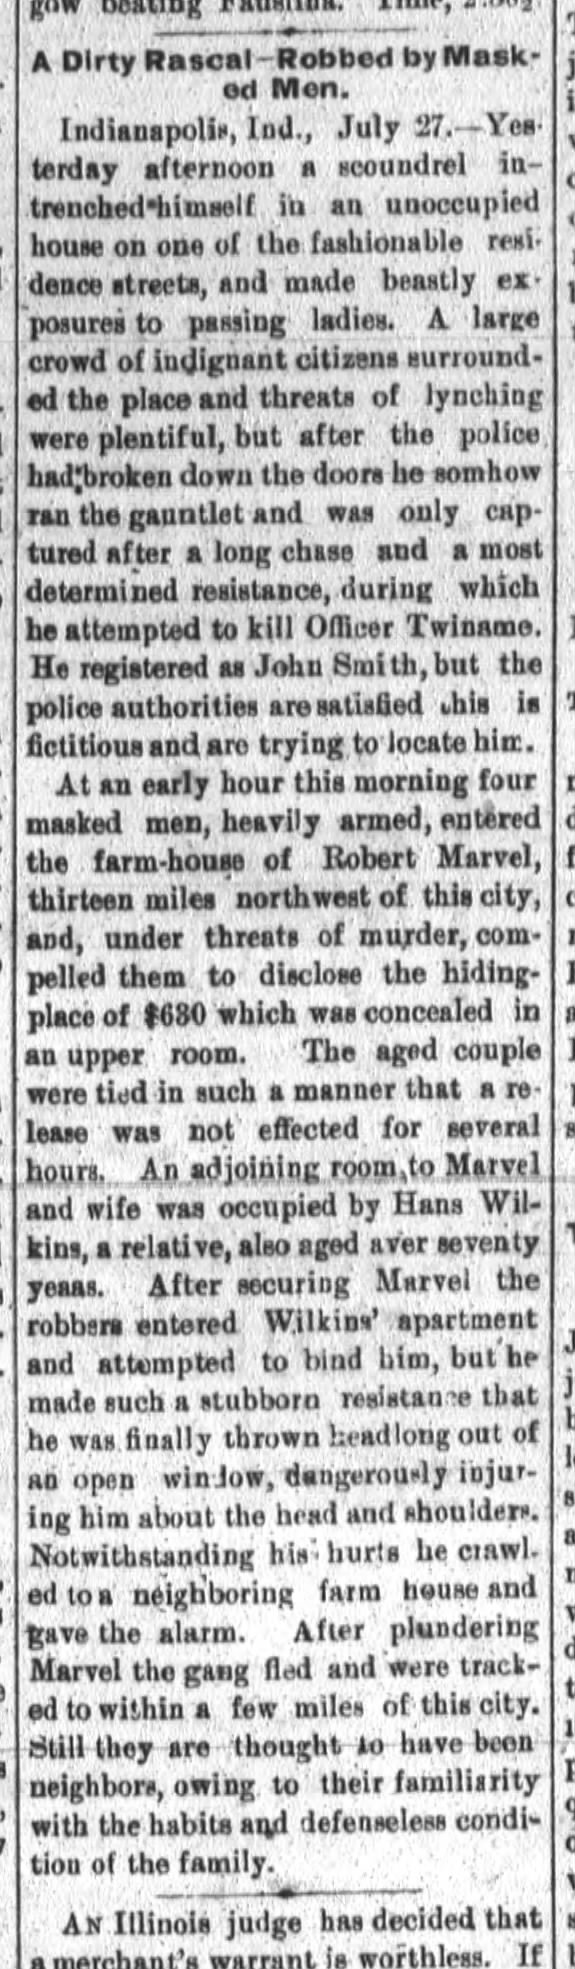 Robert Marvel Robbery - Fort Wayne Sentinel Wednesday July 27, 1881